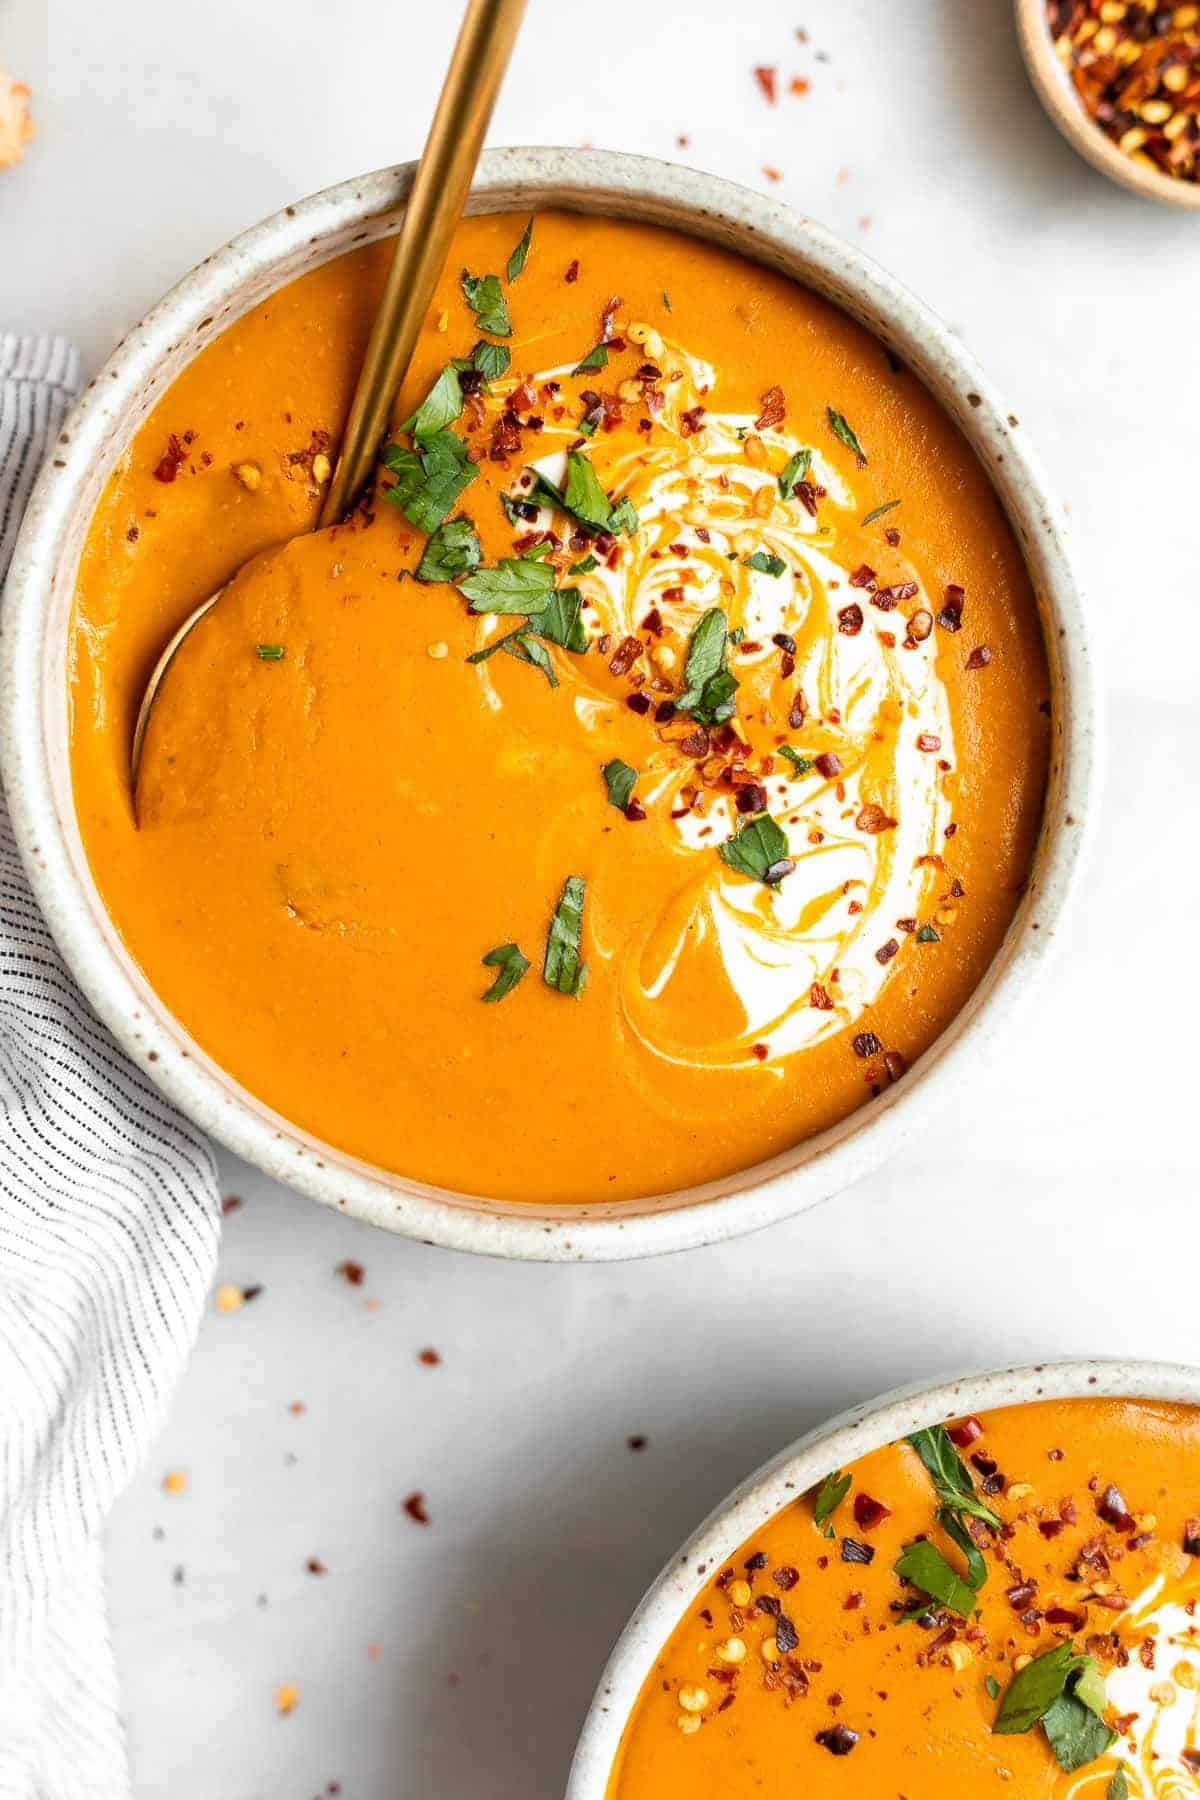 https://eatwithclarity.com/wp-content/uploads/2020/12/red-lentil-carrot-soup-2.jpg